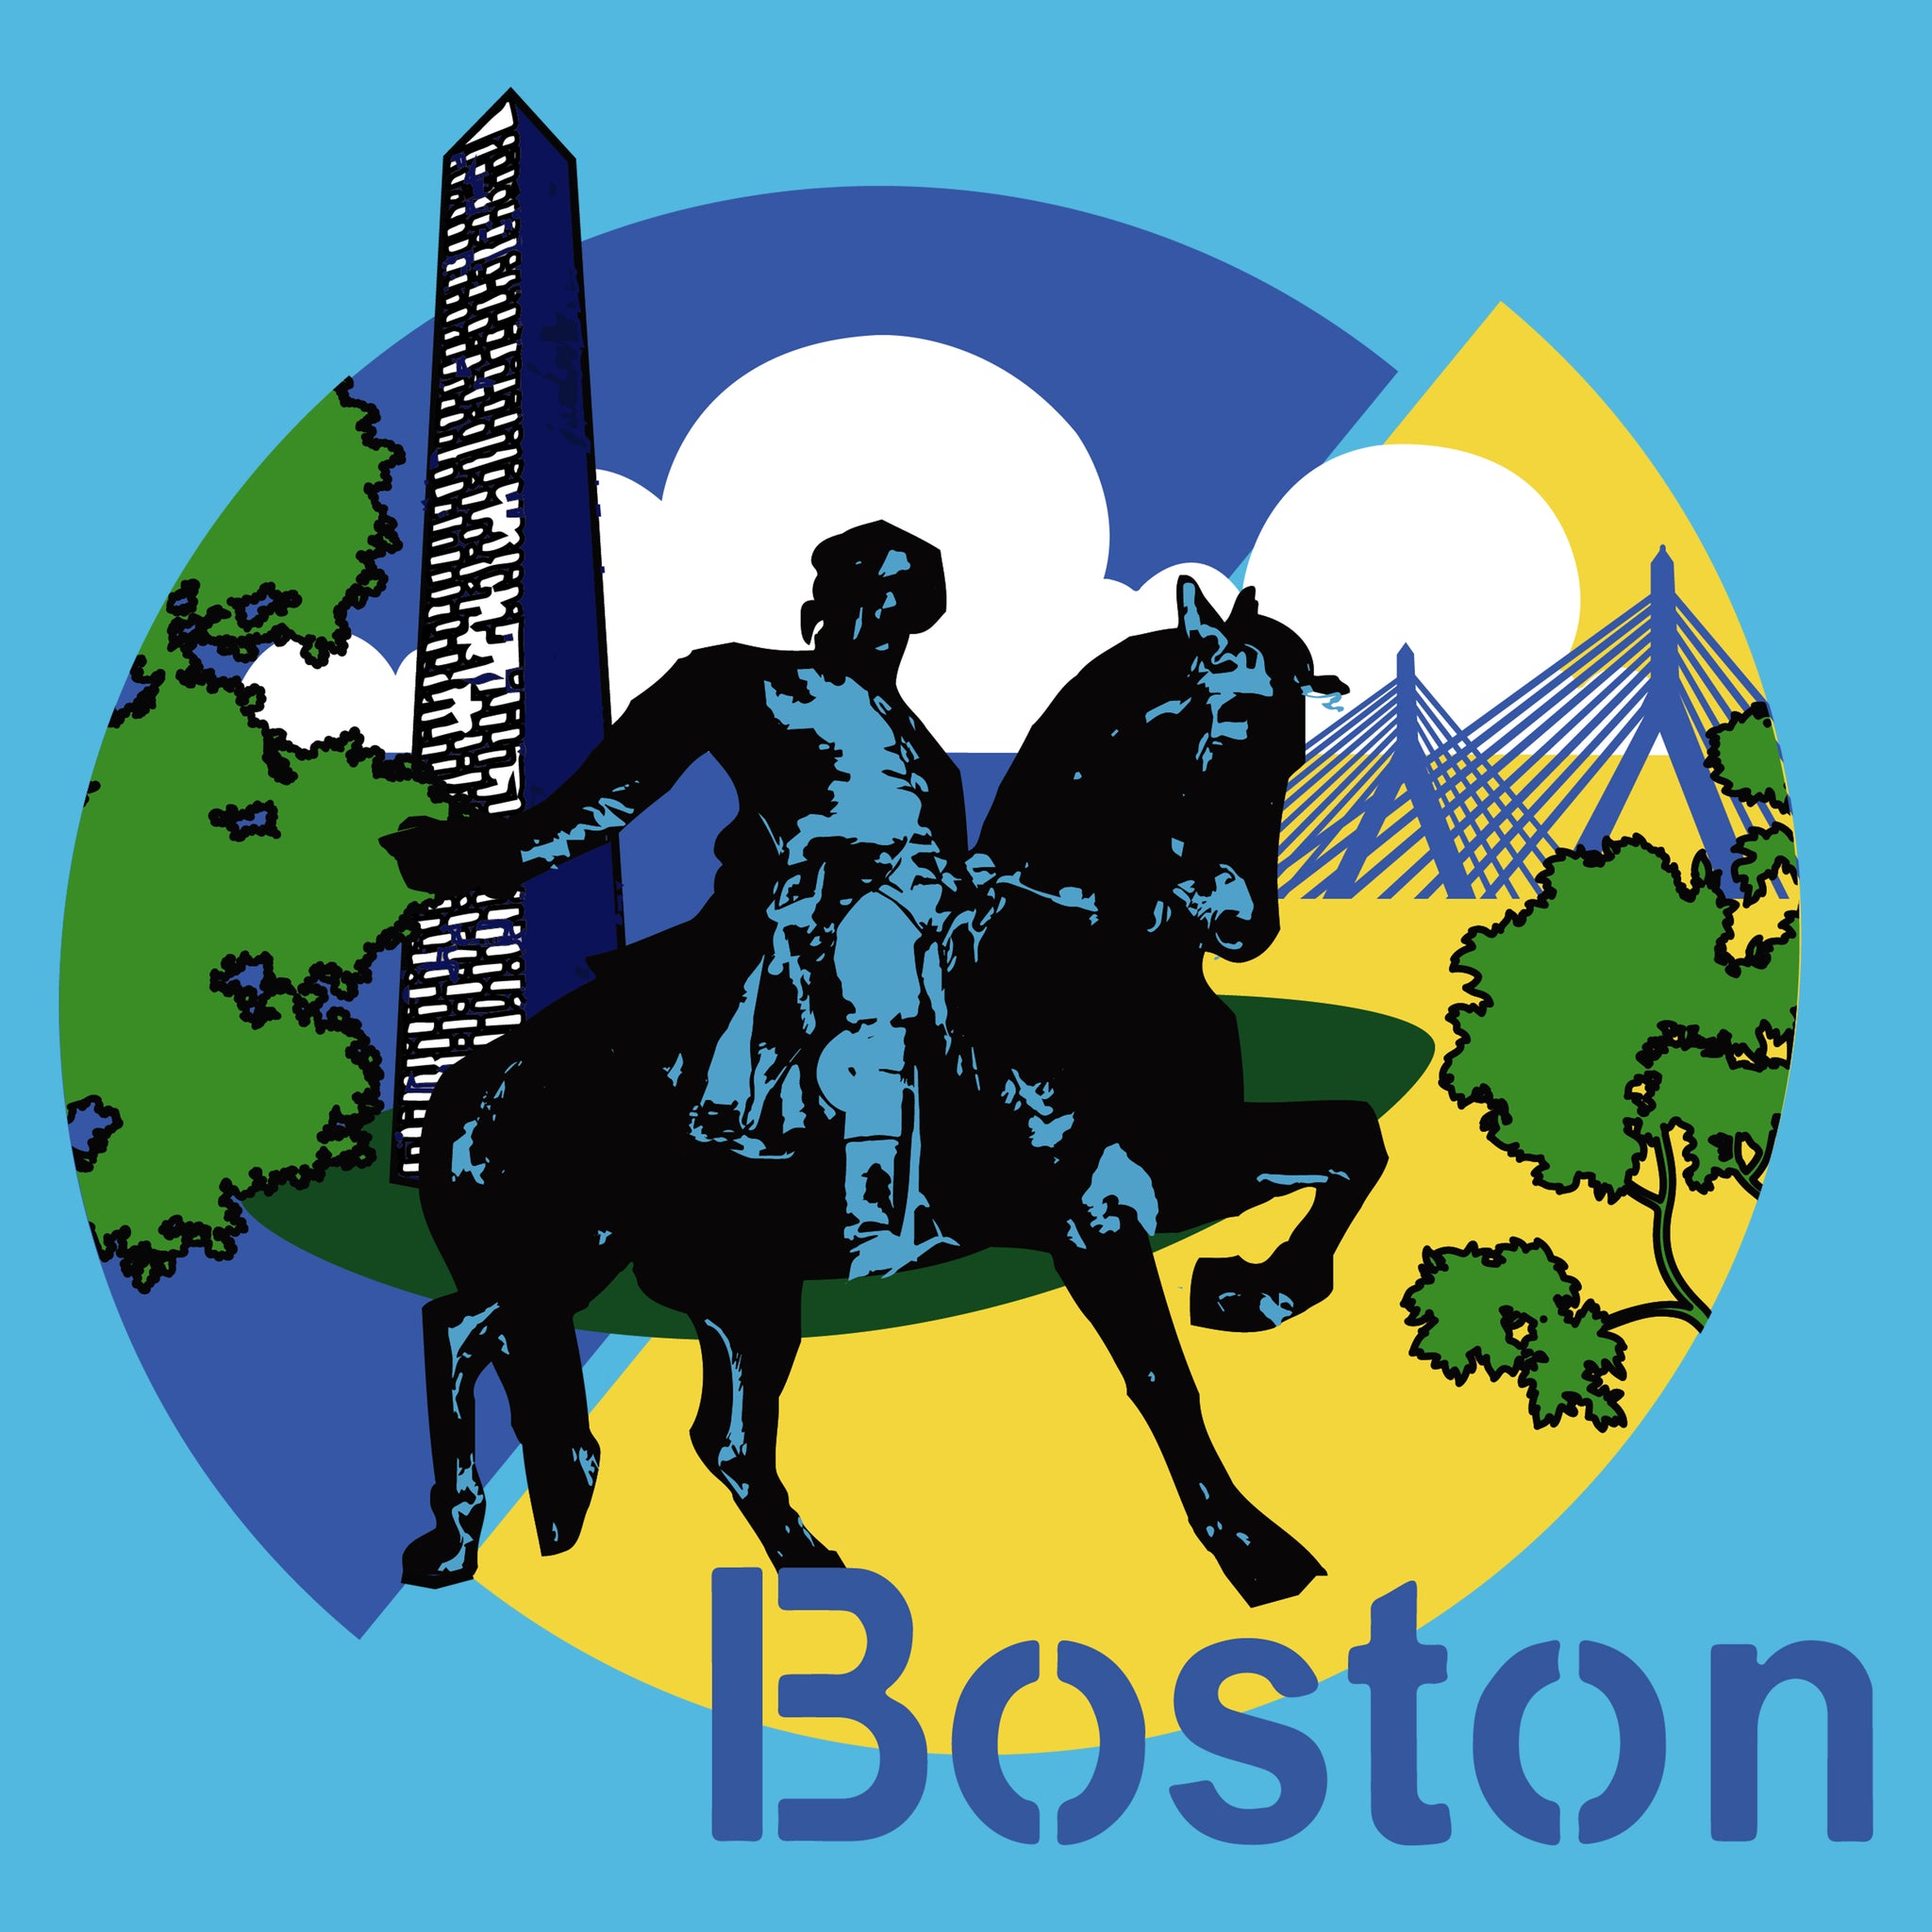 design with paul revere statue, bunker hill monument, zakim bridge boston on blue background